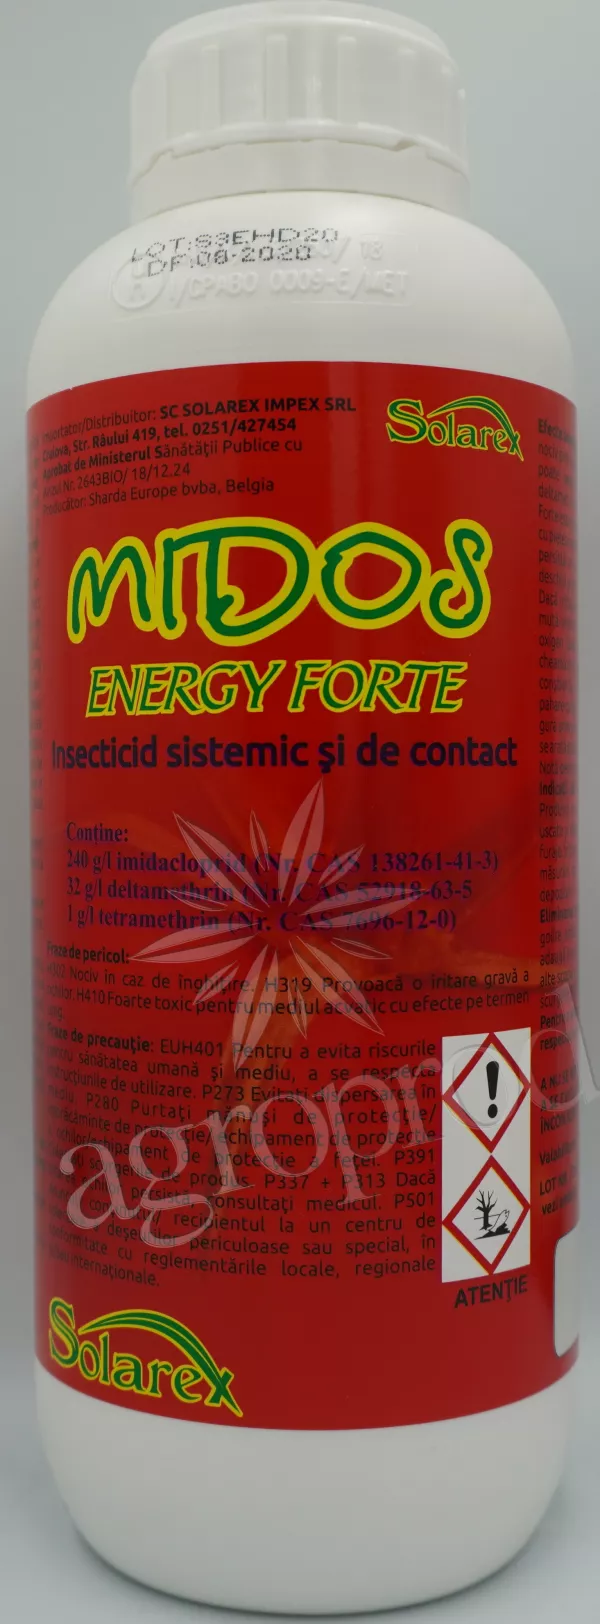 Midos Energy Forte 1 L